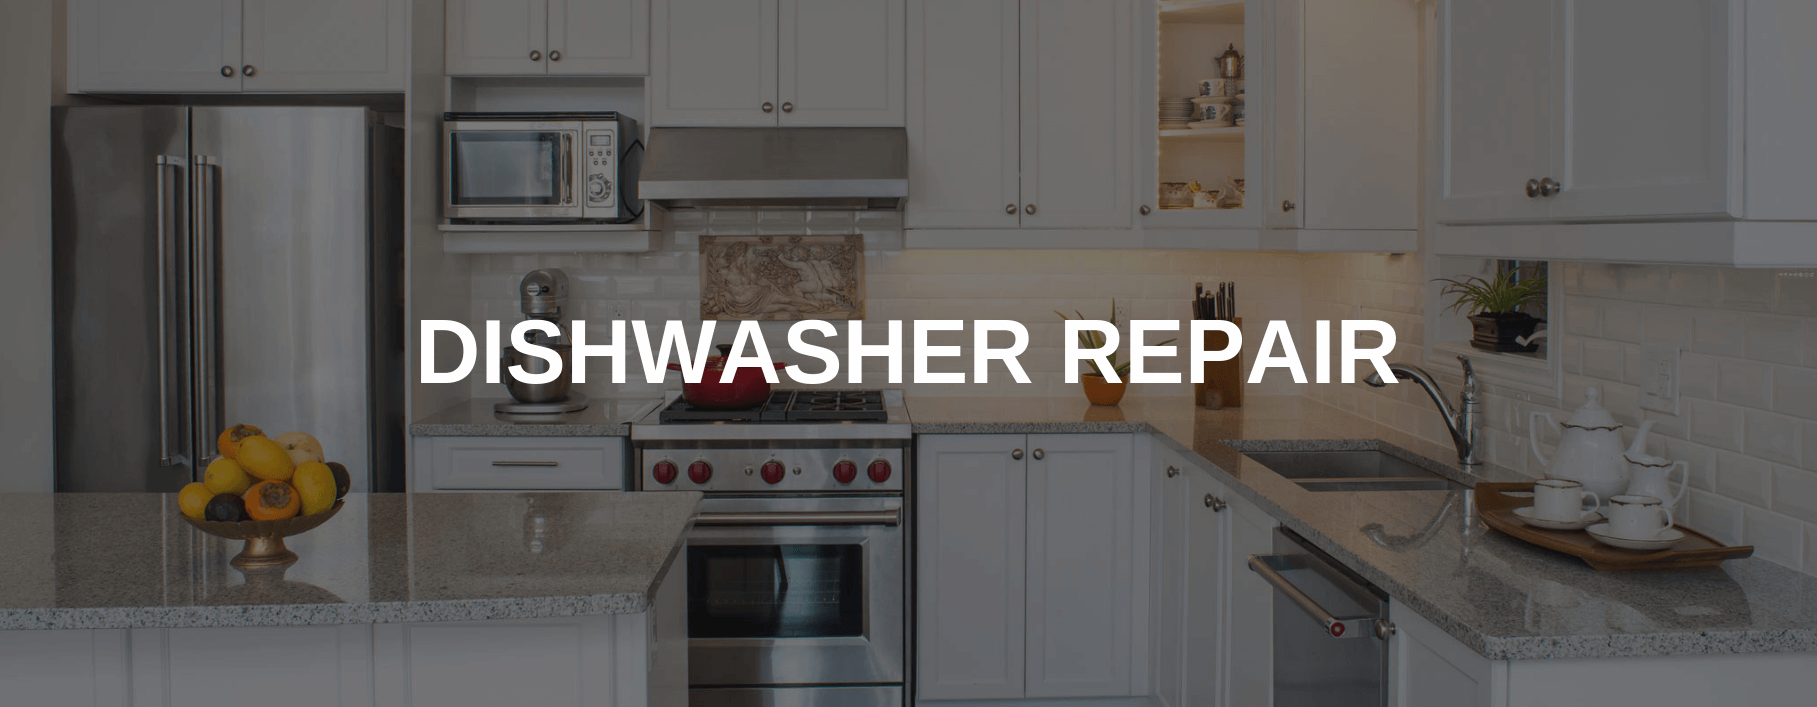 dishwasher repair franklin